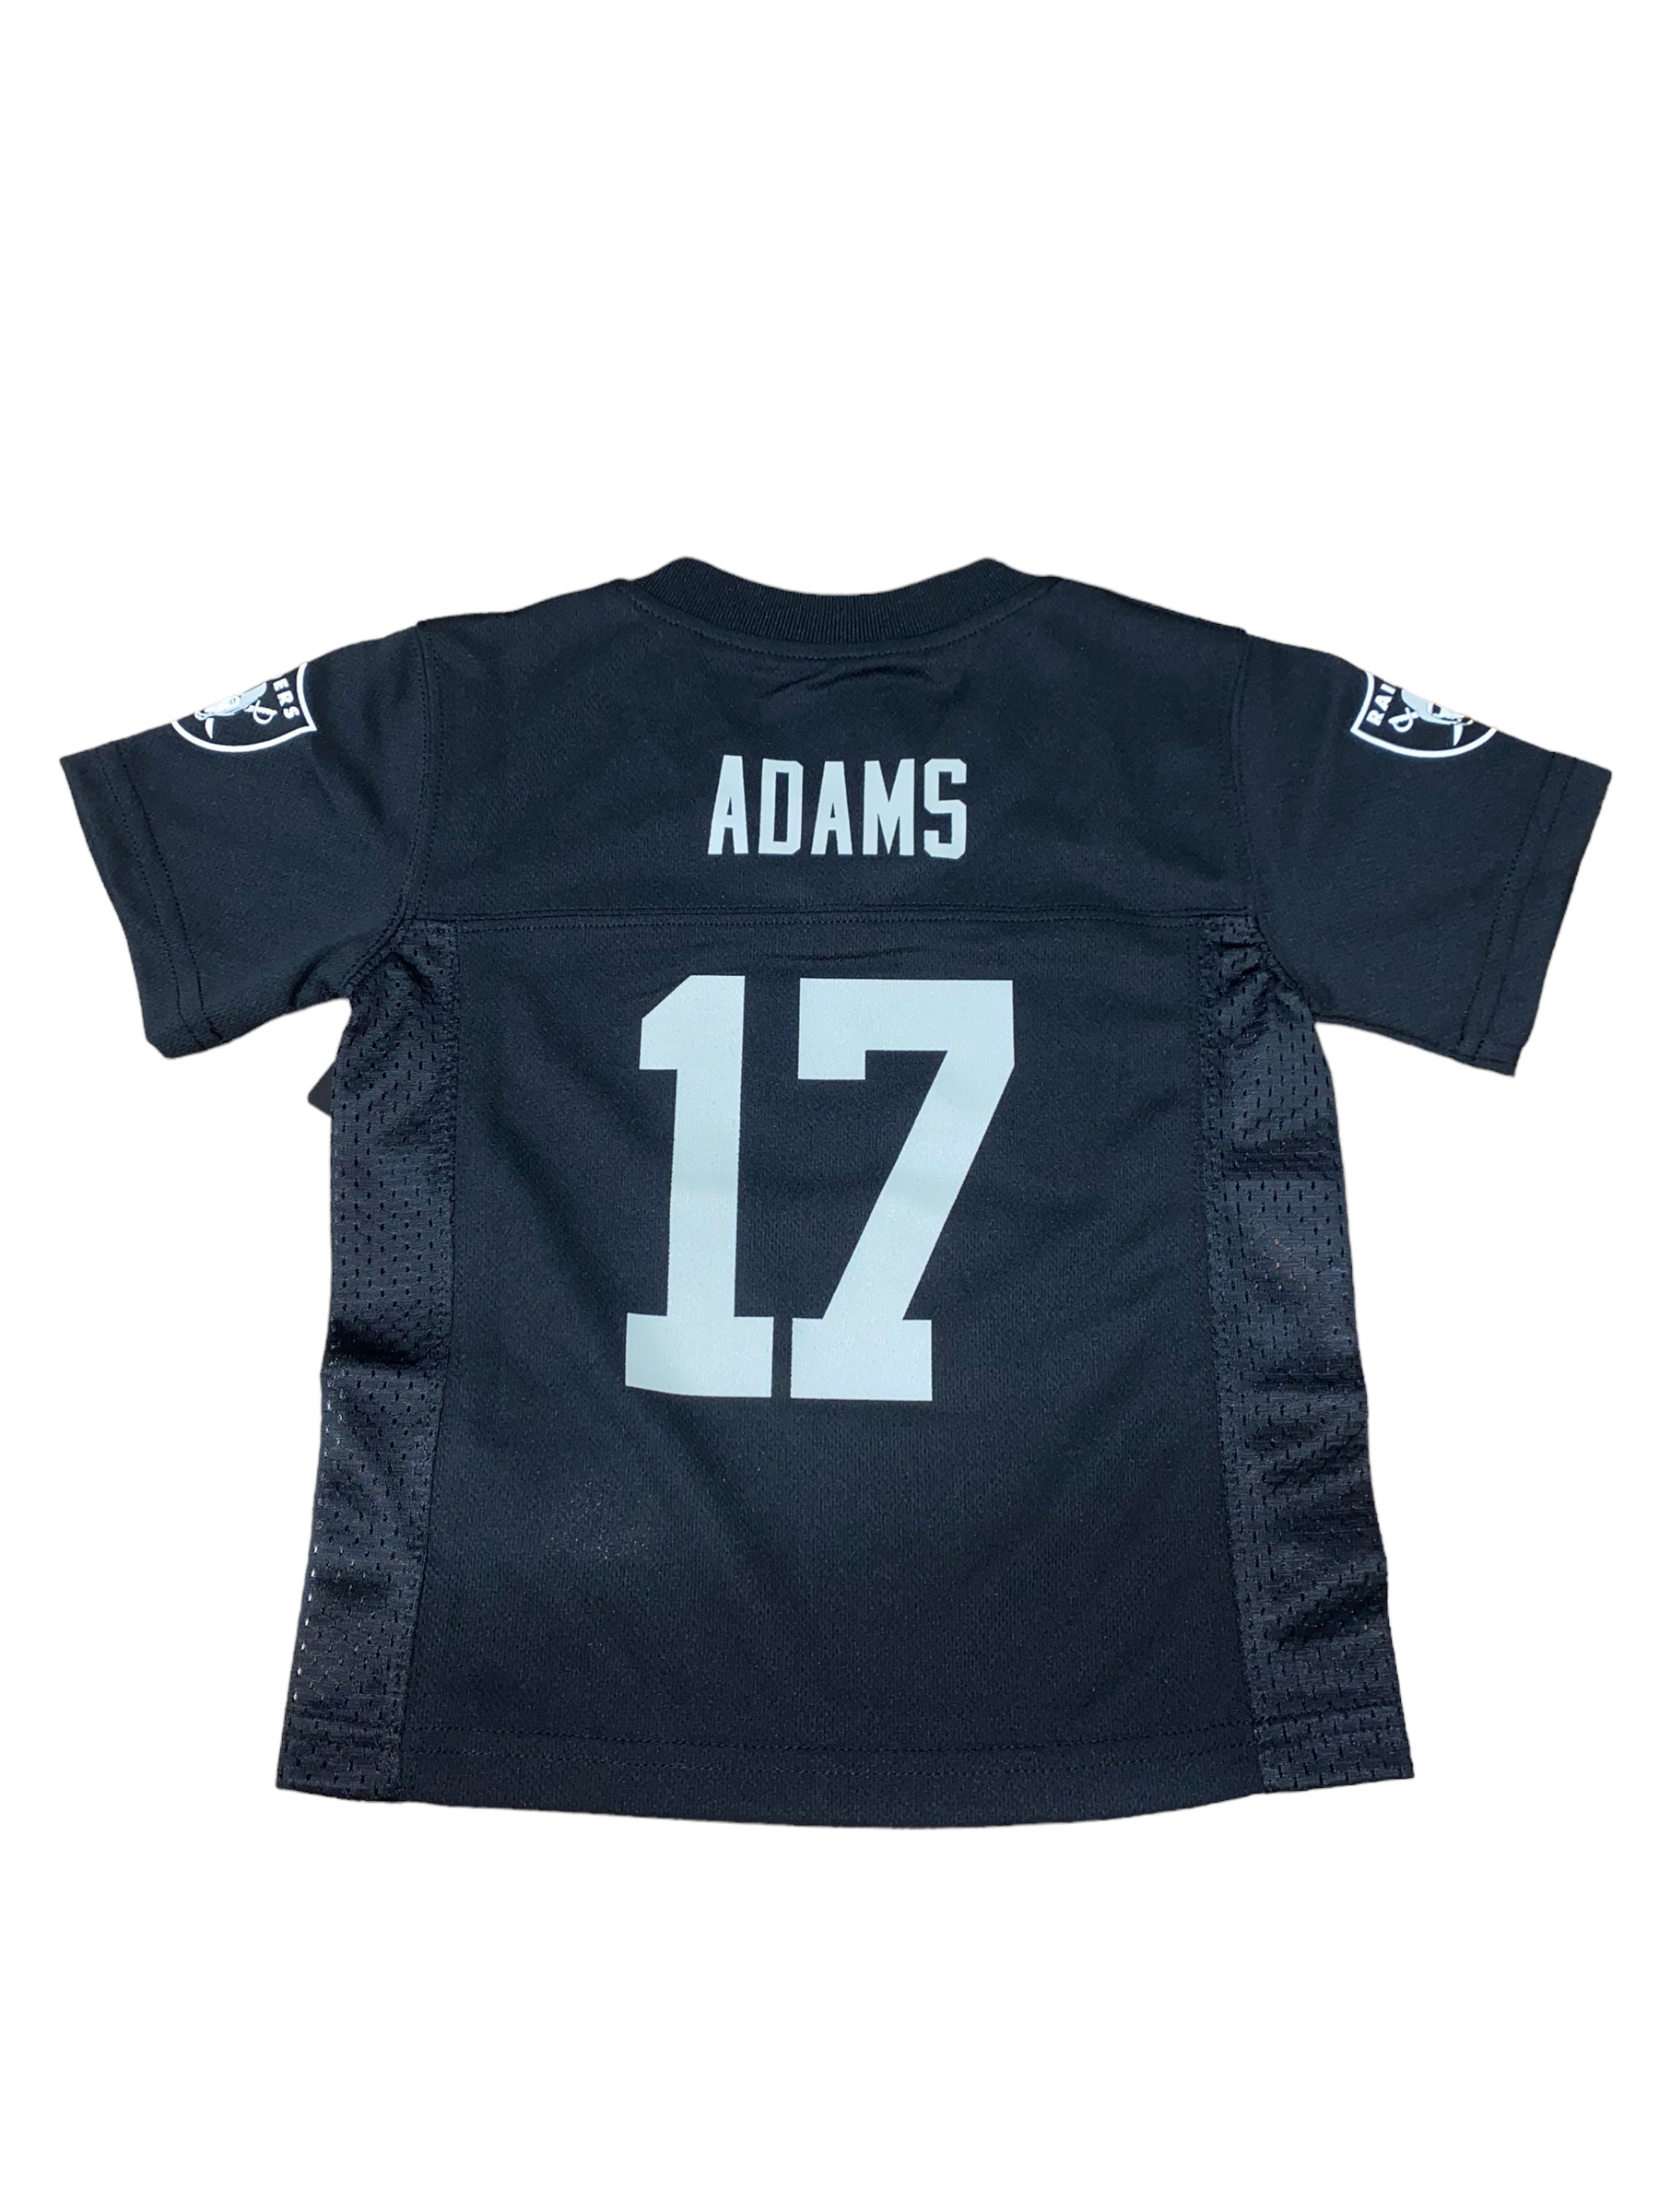 adams raiders jersey